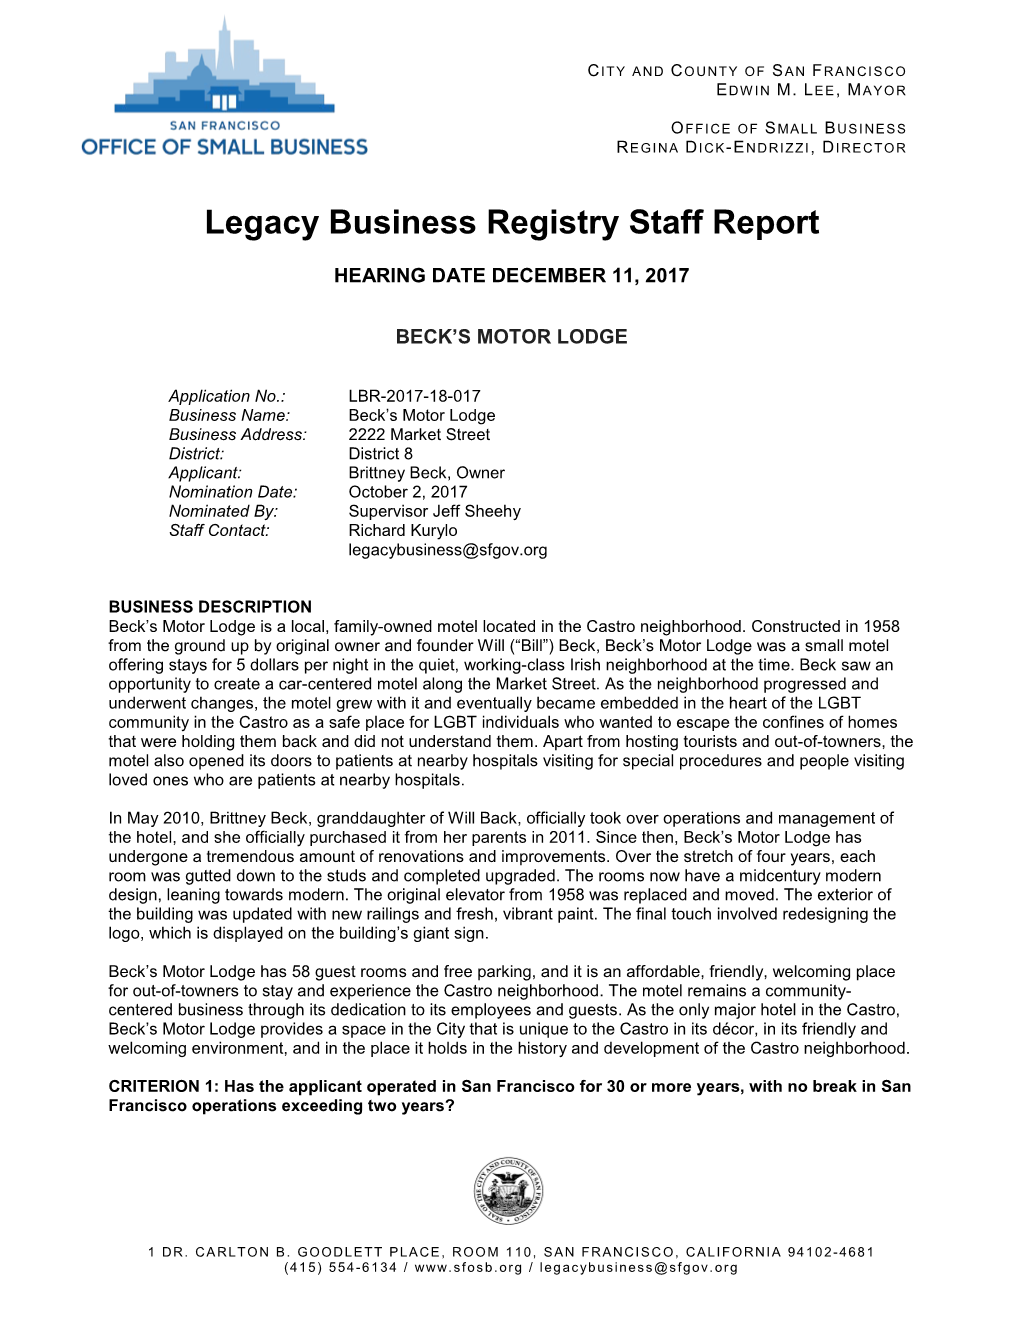 Legacy Business Registry Staff Report